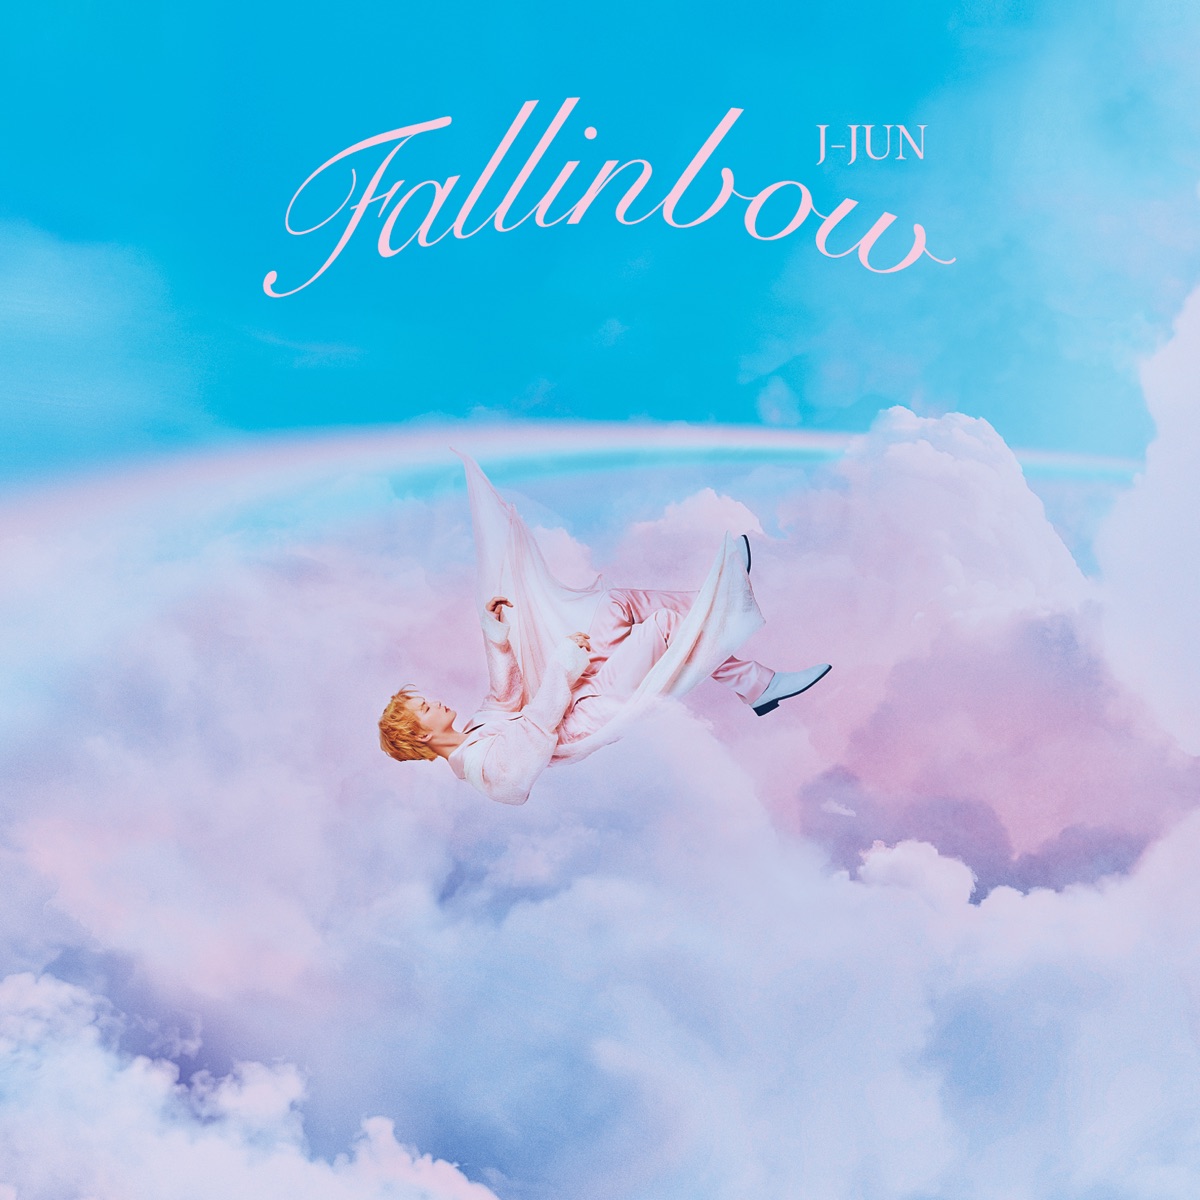 『J-JUN with 中島美嘉 - One Heart 歌詞』収録の『Fallinbow』ジャケット